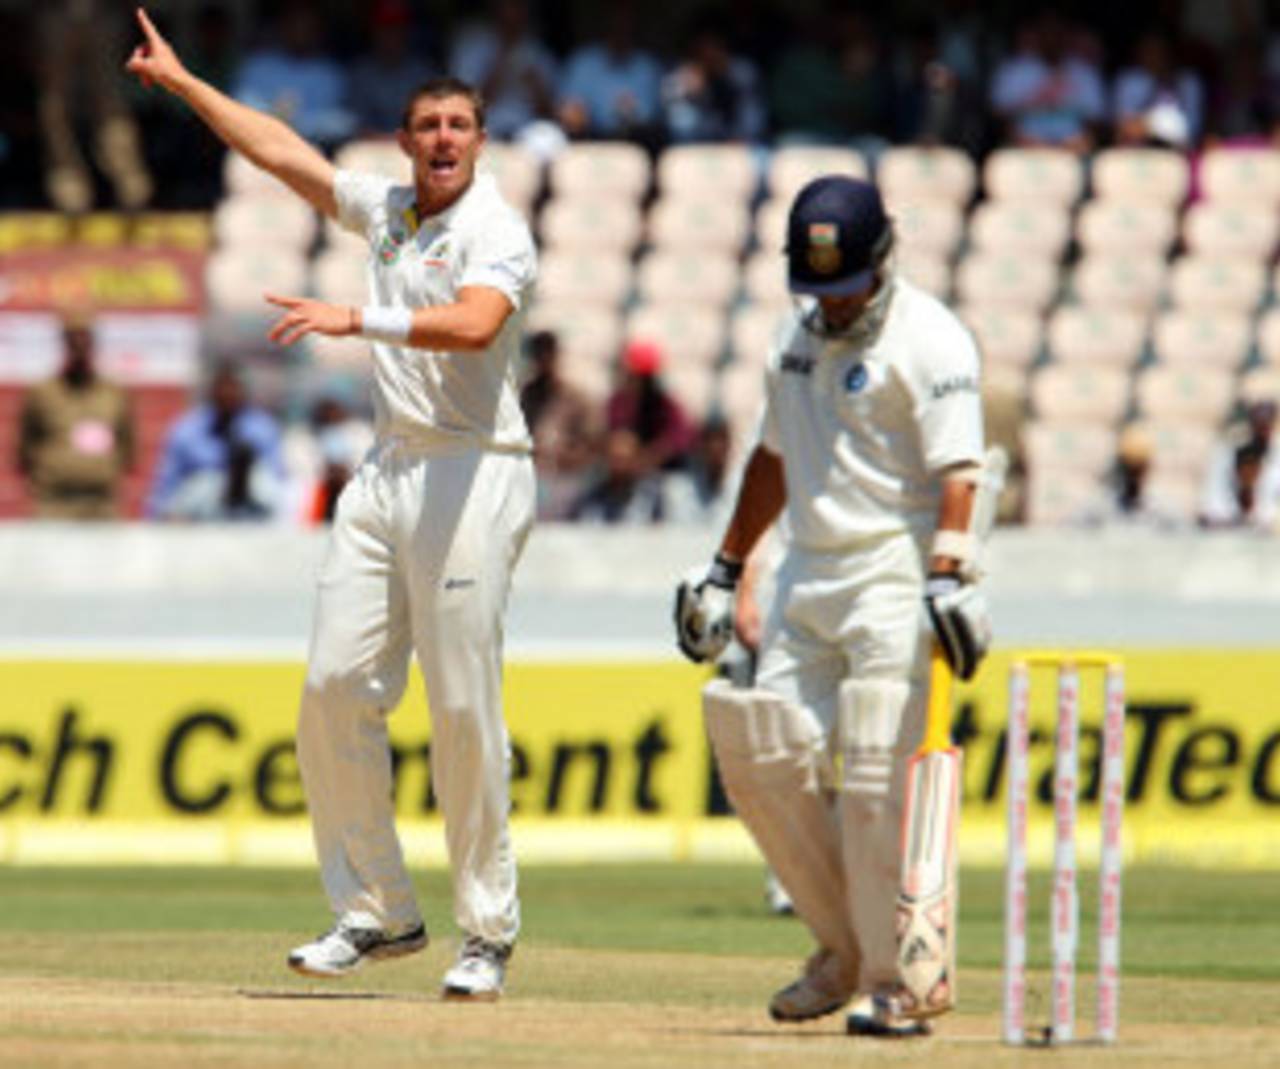 James Pattinson had Sachin Tendulkar caught behind for 7, India v Australia, 2nd Test, Hyderabad, 3rd day, March 4, 2013